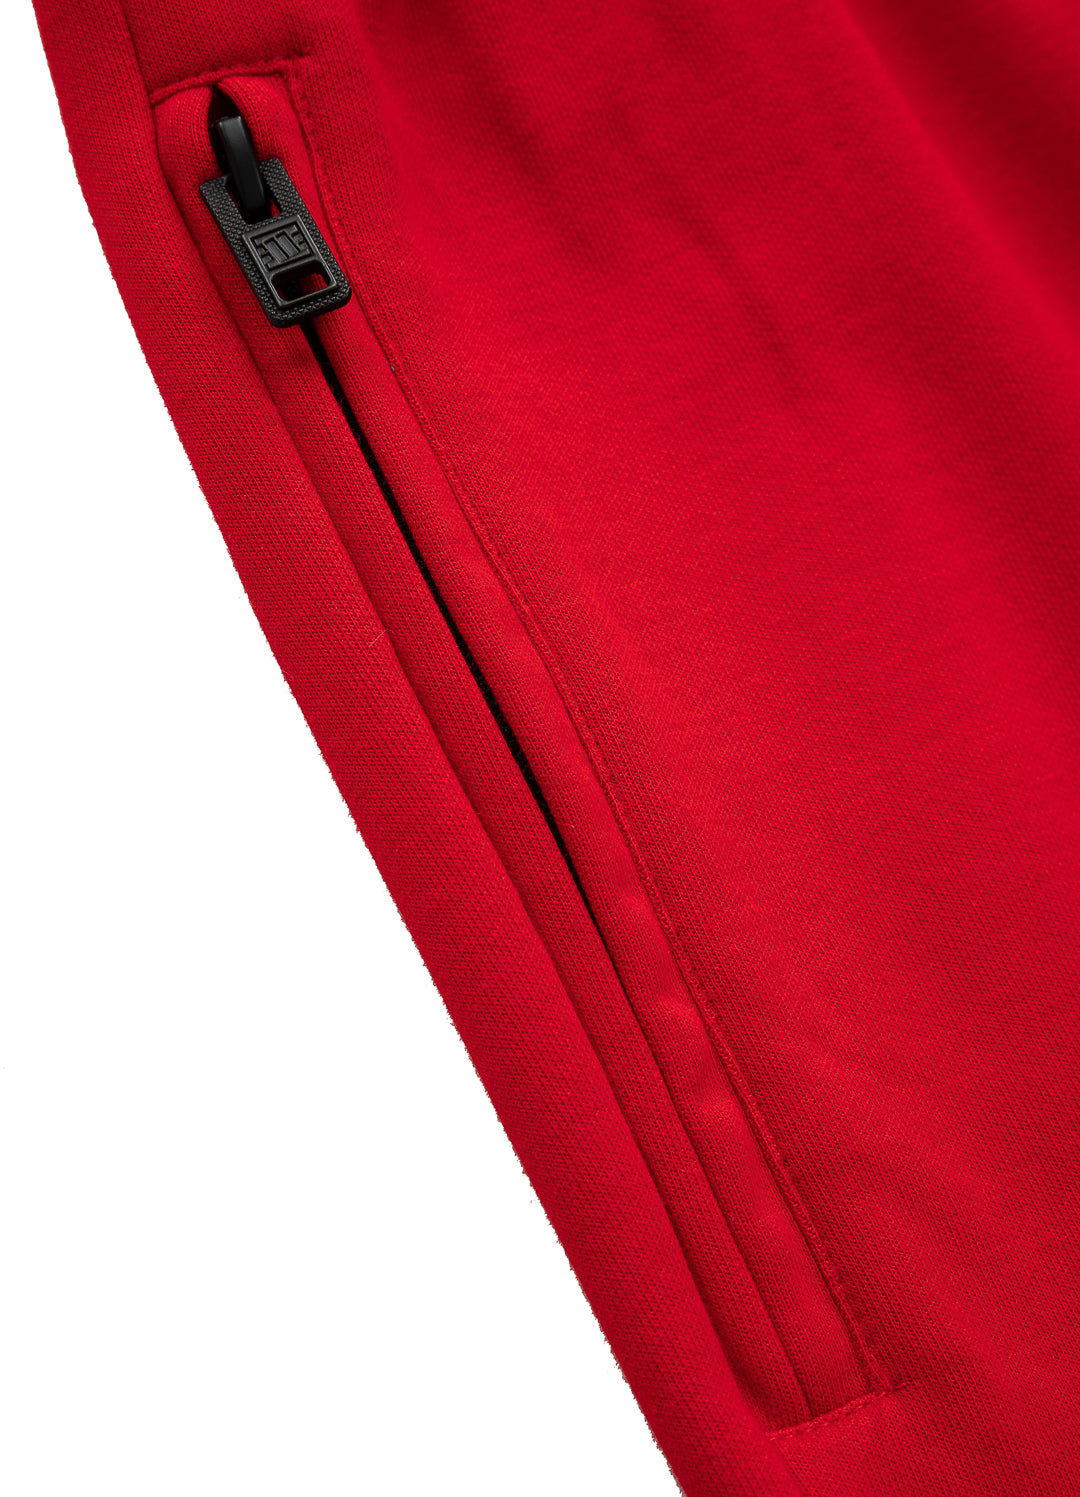 PHOENIX Red Shorts.